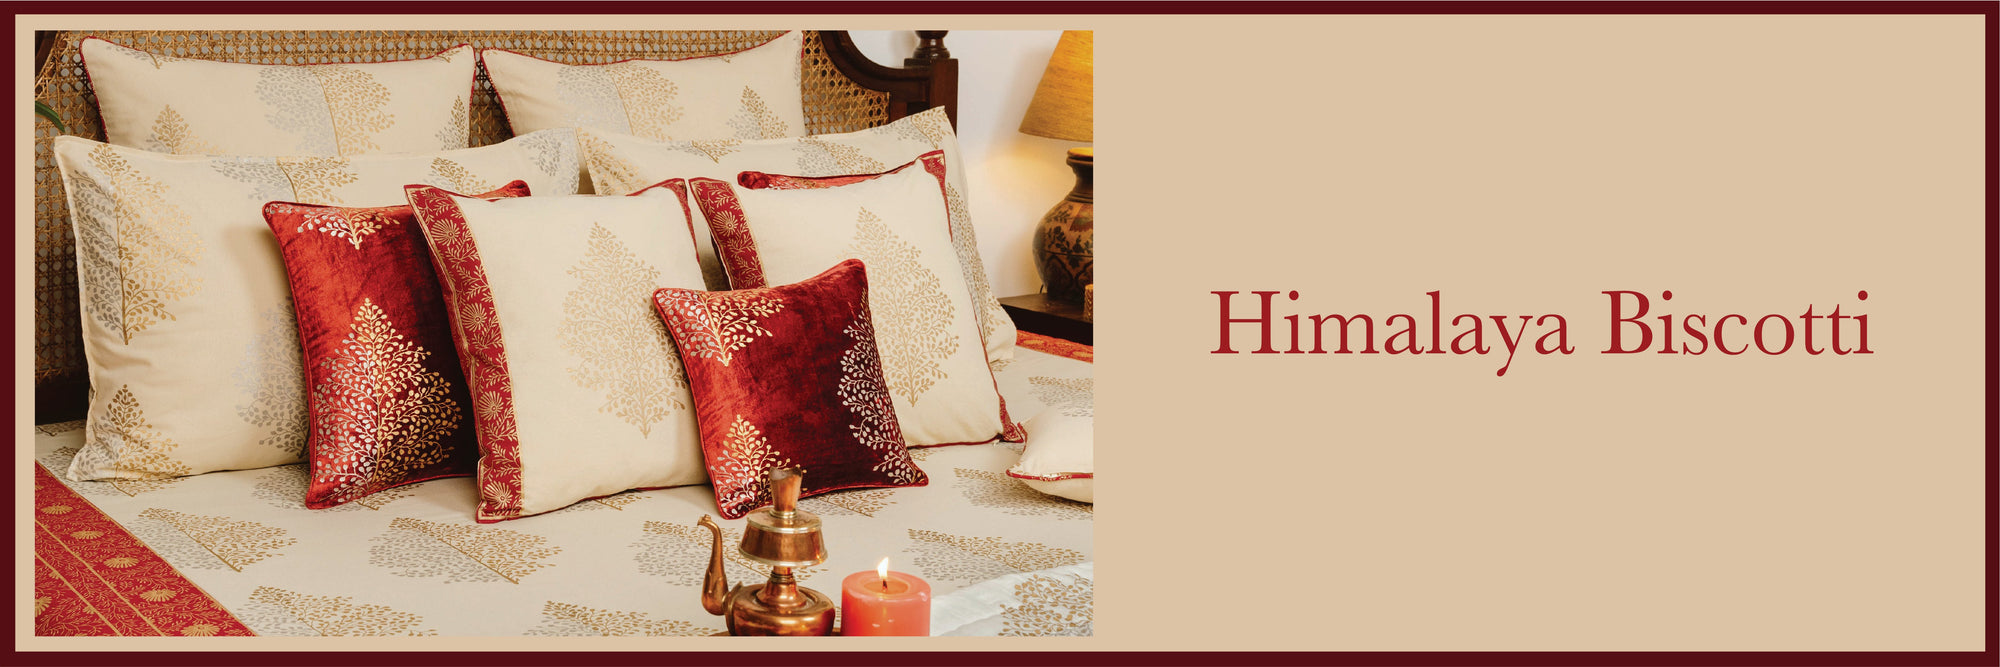 Himalaya Biscotti Bedroom Collection